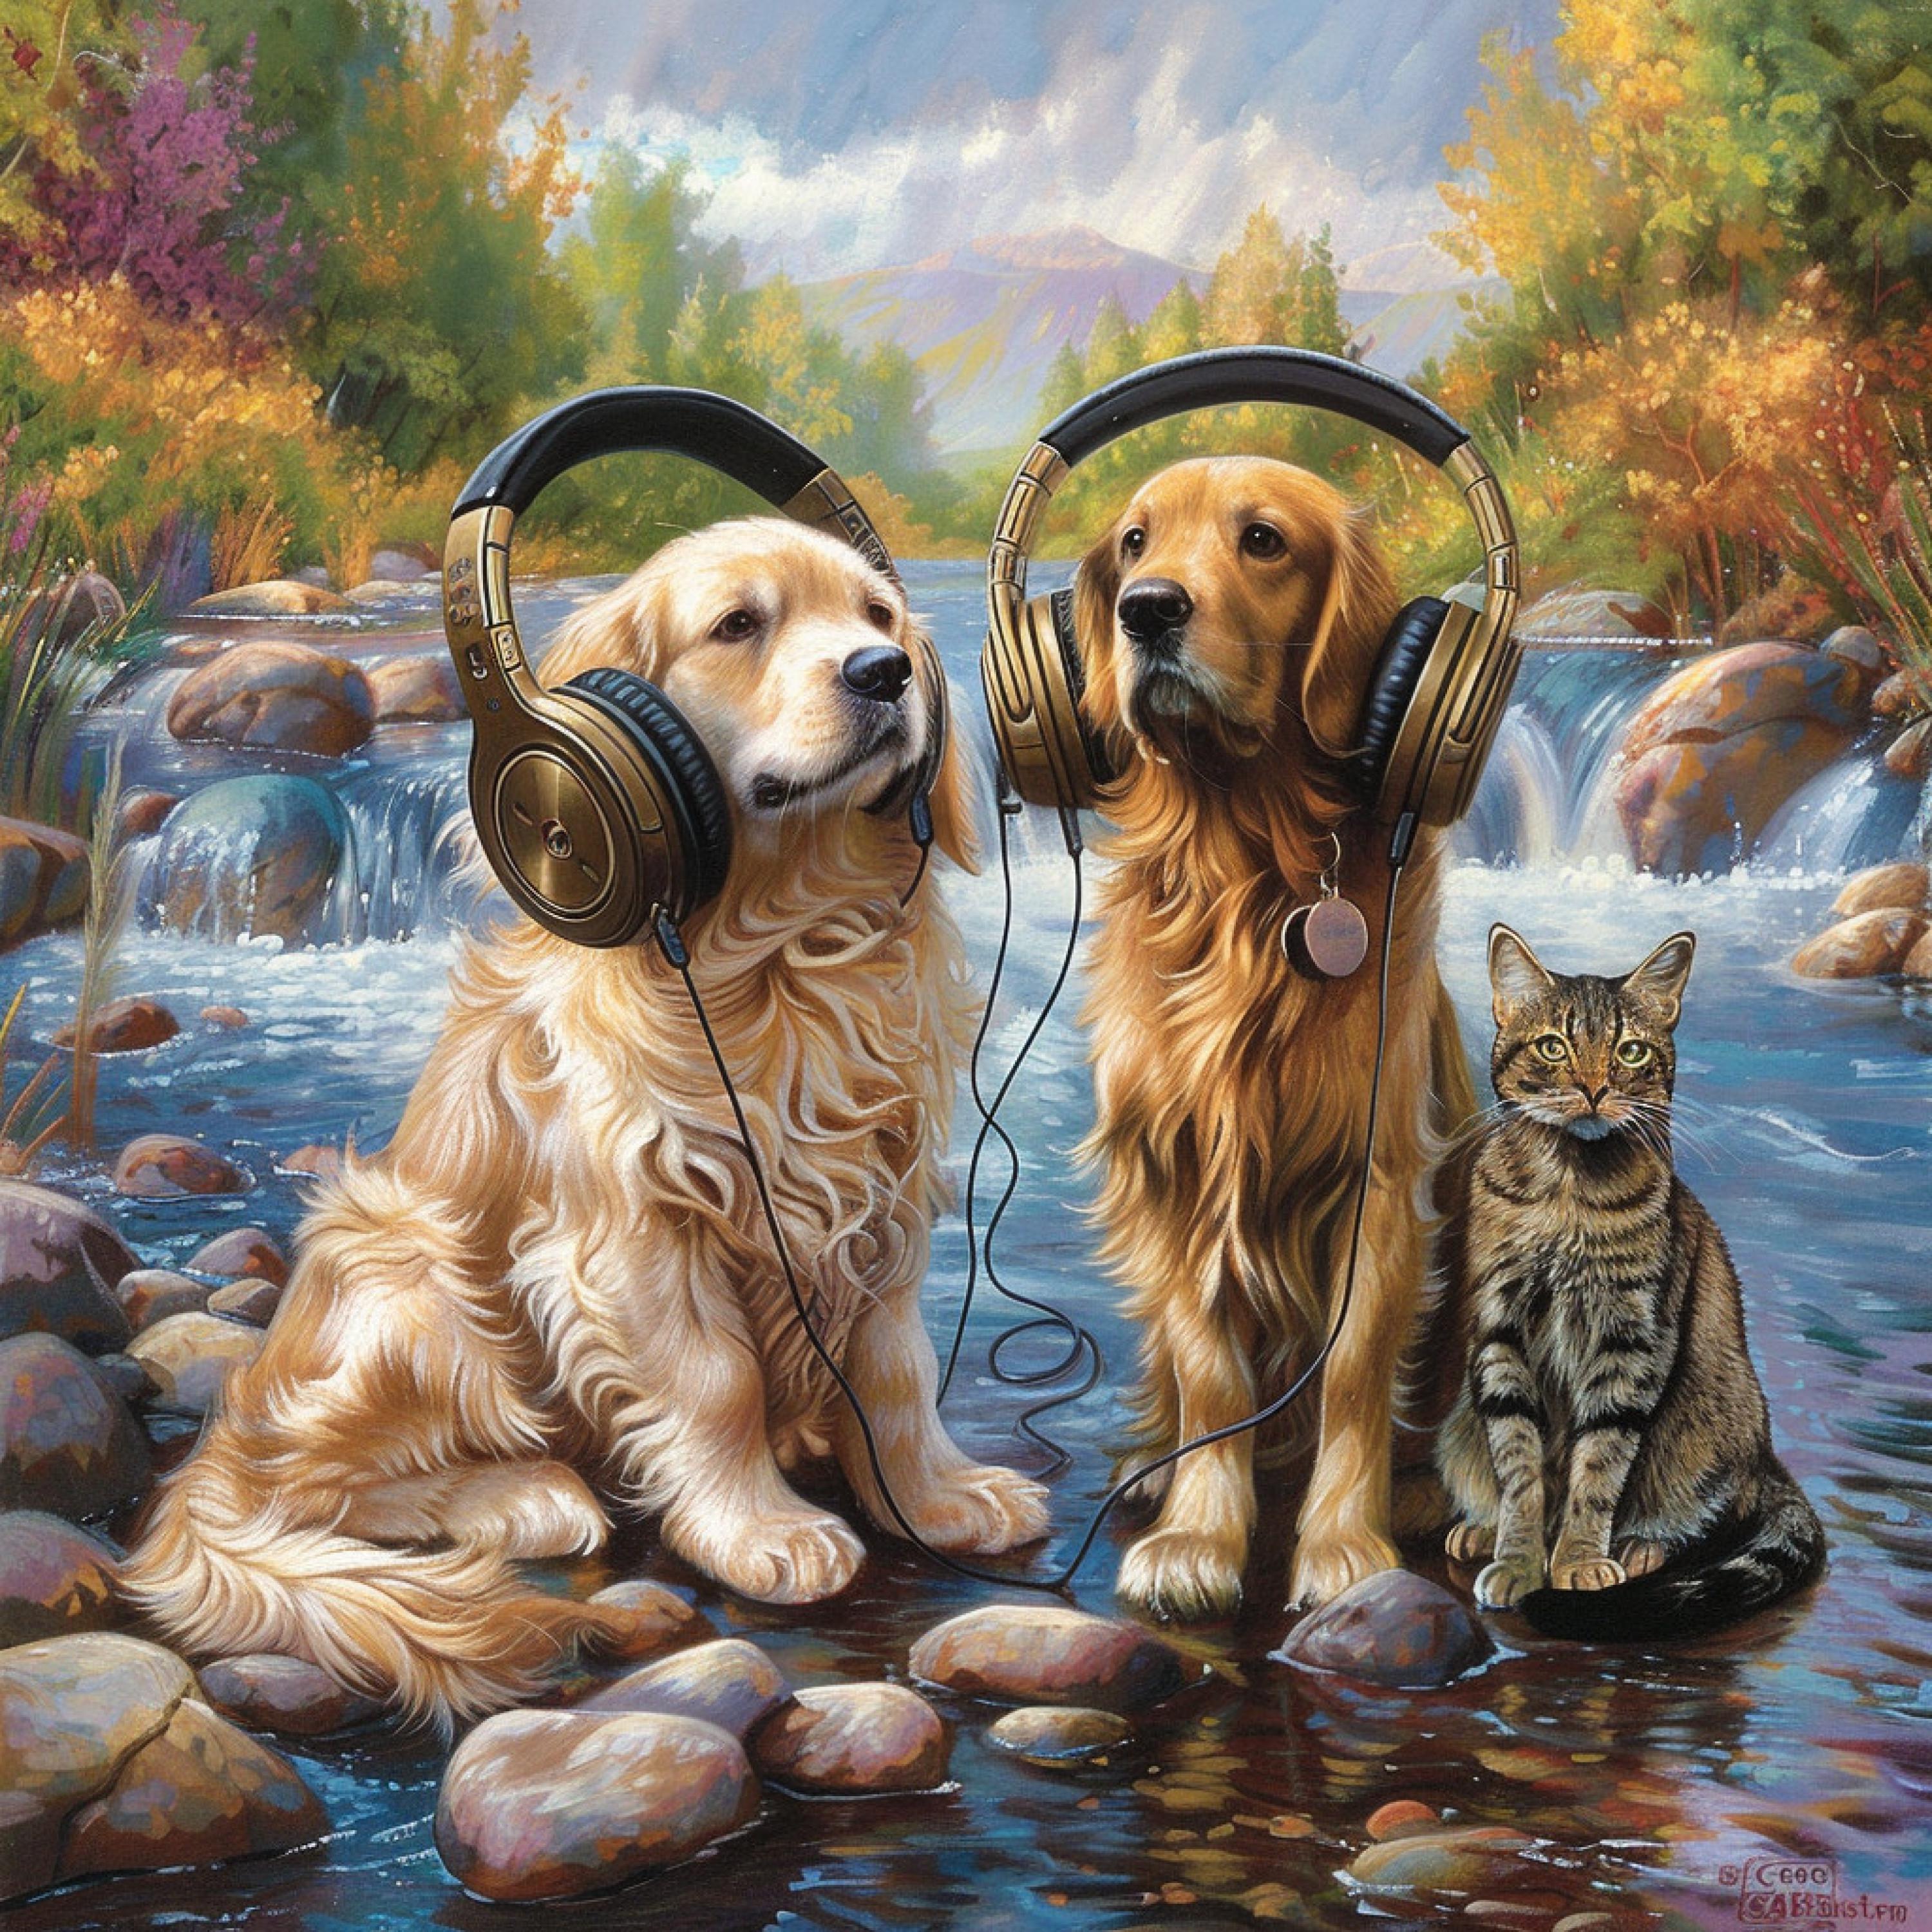 Calm Pets Music Academy - Relaxing River Pet's Joy